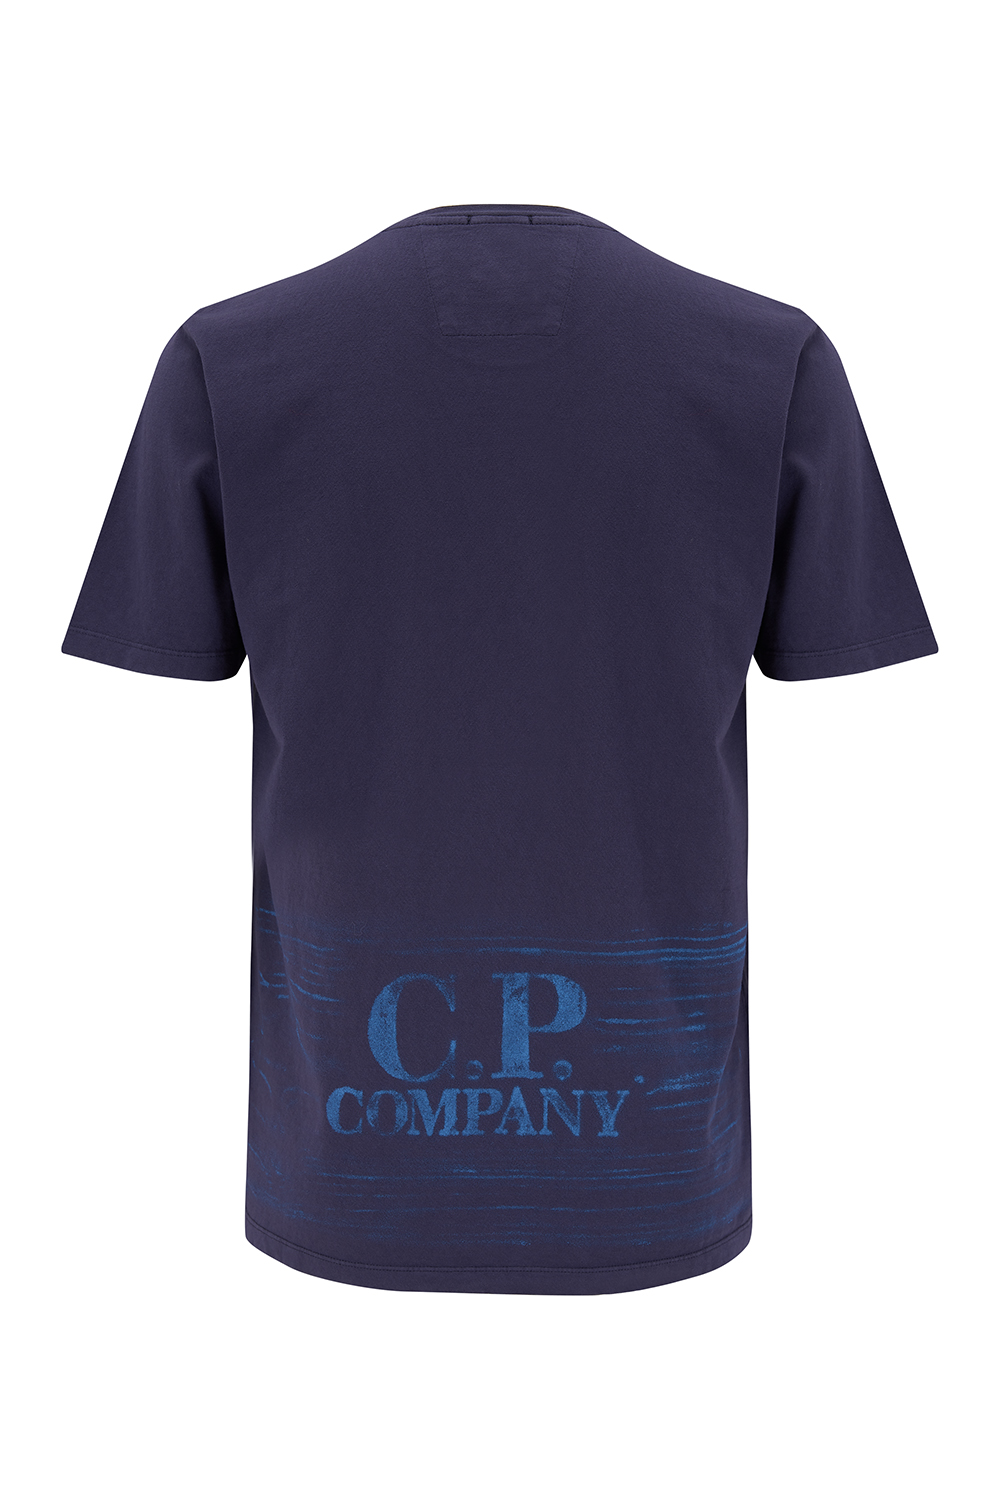 C.P. Company Men's Jersey Vintage Logo T-shirt Purple - New SS21 Collection